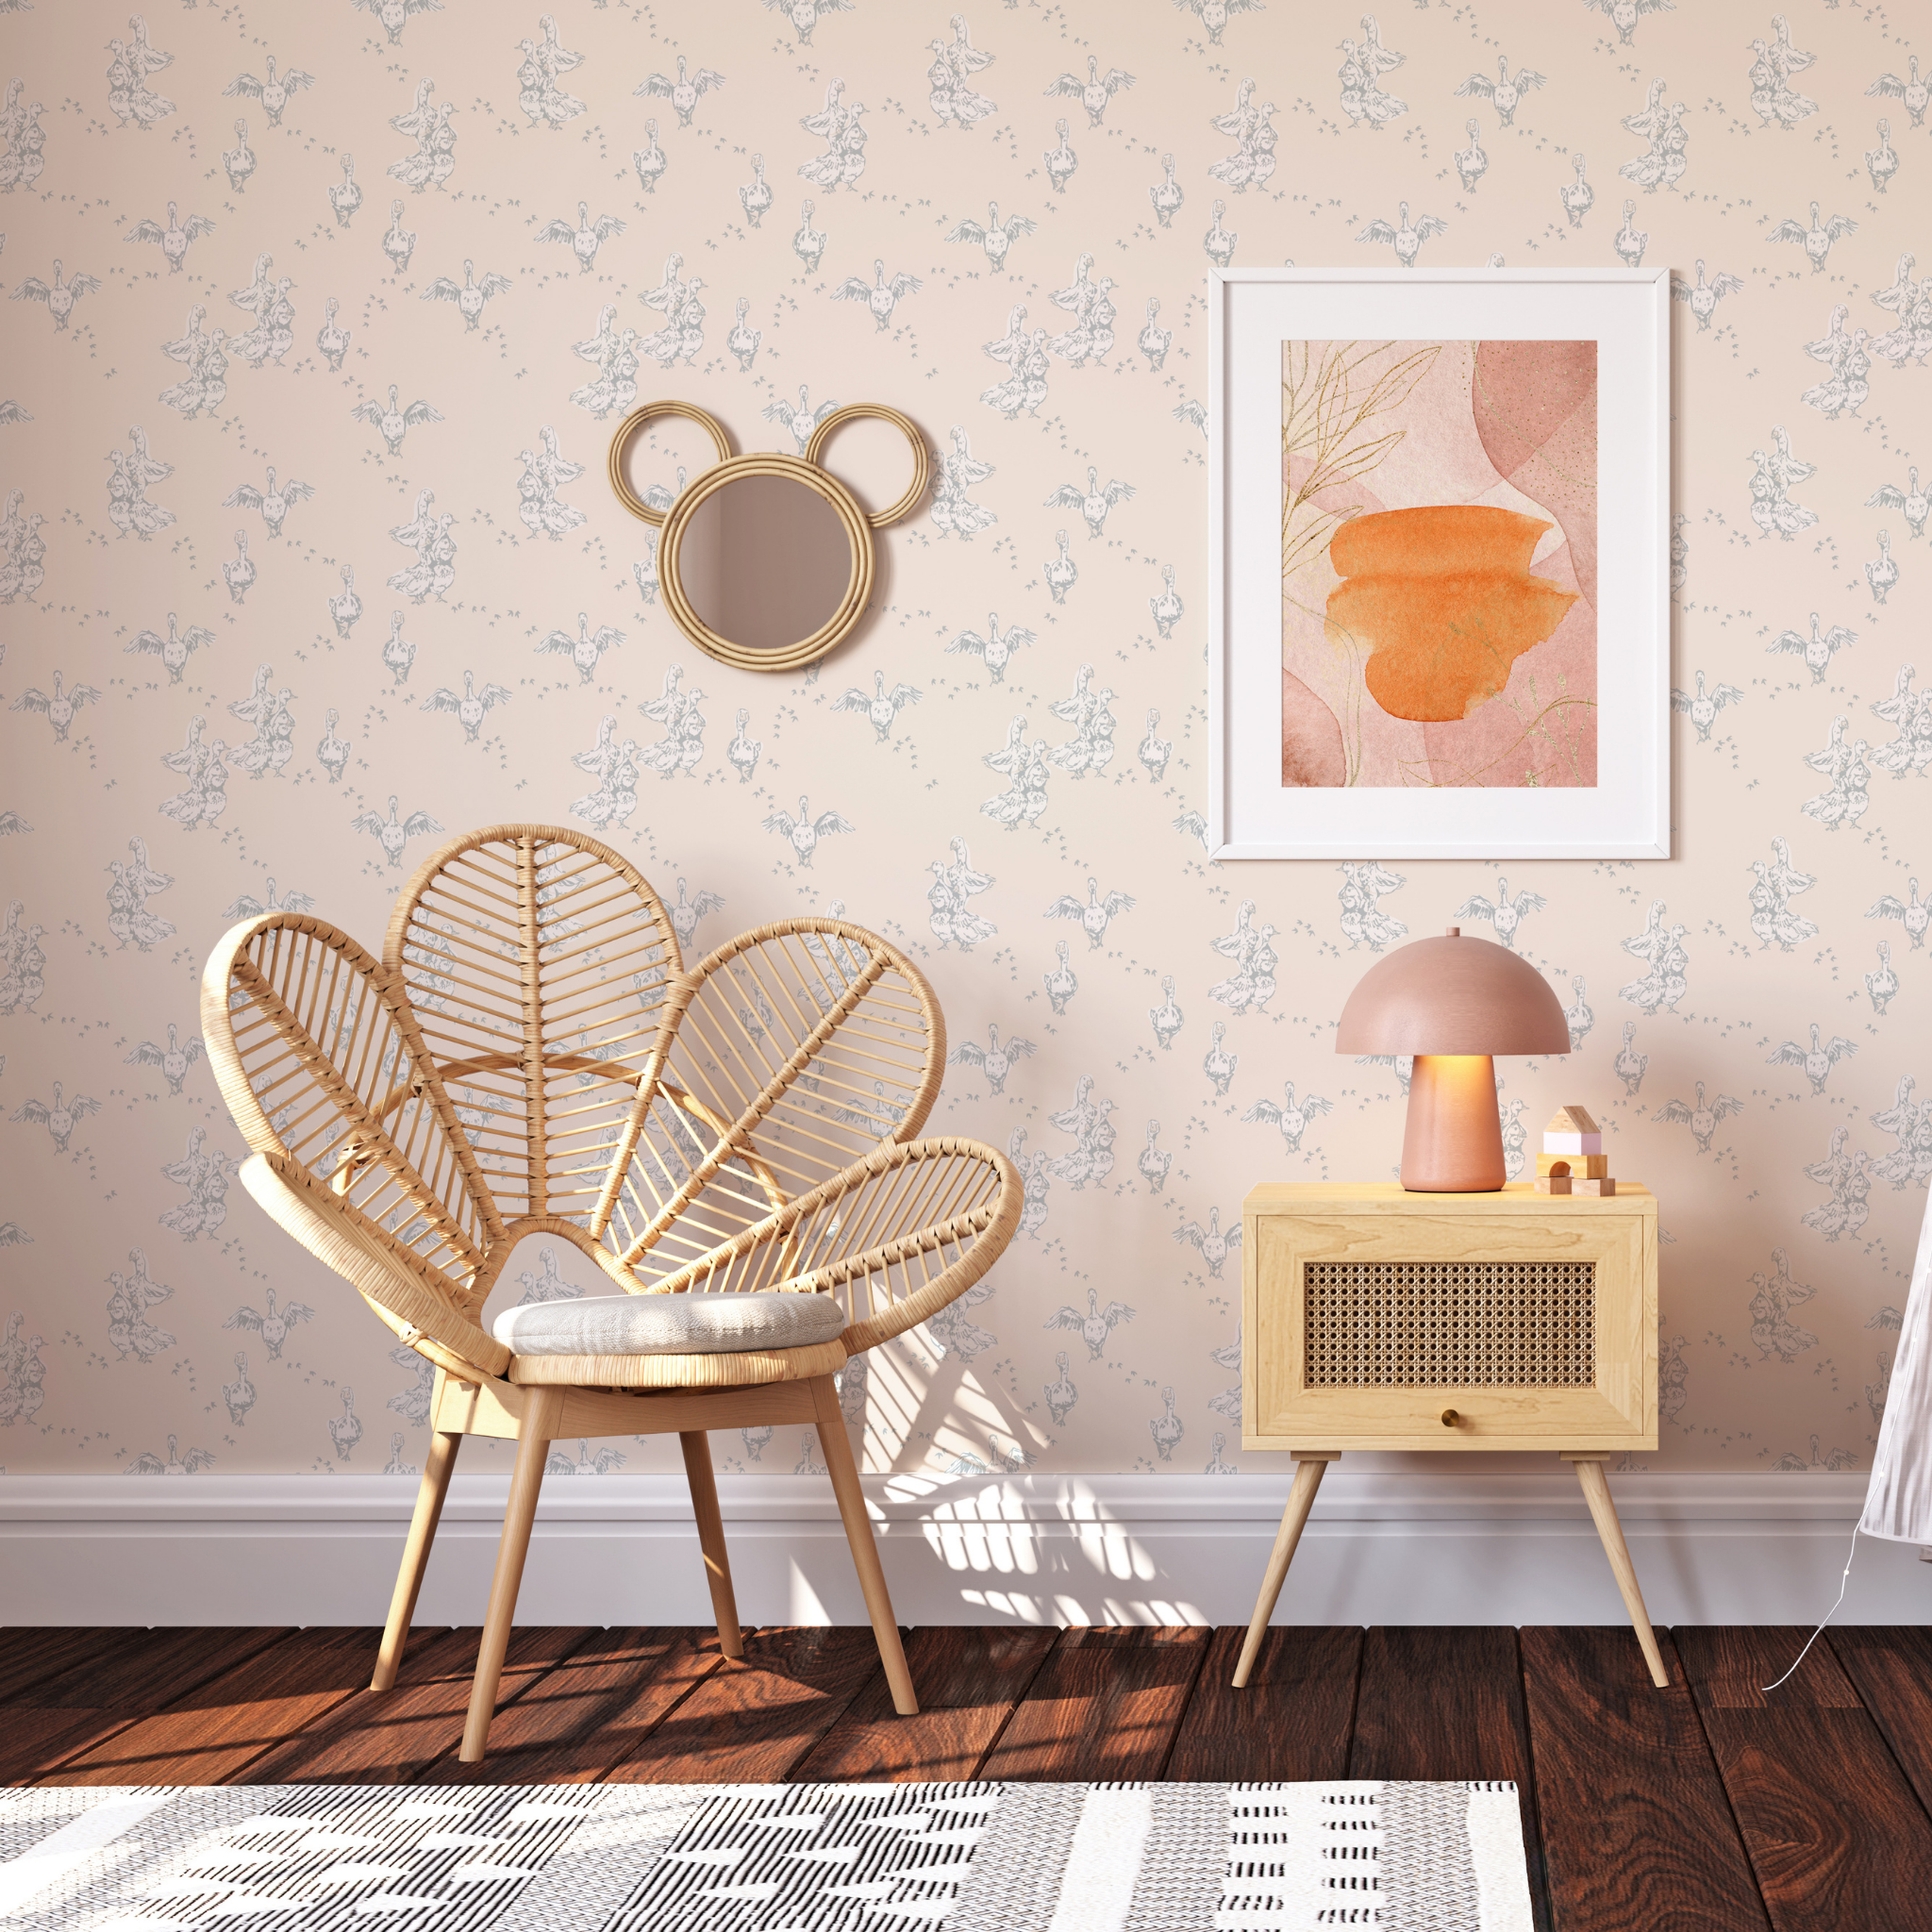 "Wall Blush's Abigail (Cream) Wallpaper showcased in a stylish living room highlighting its elegant design."